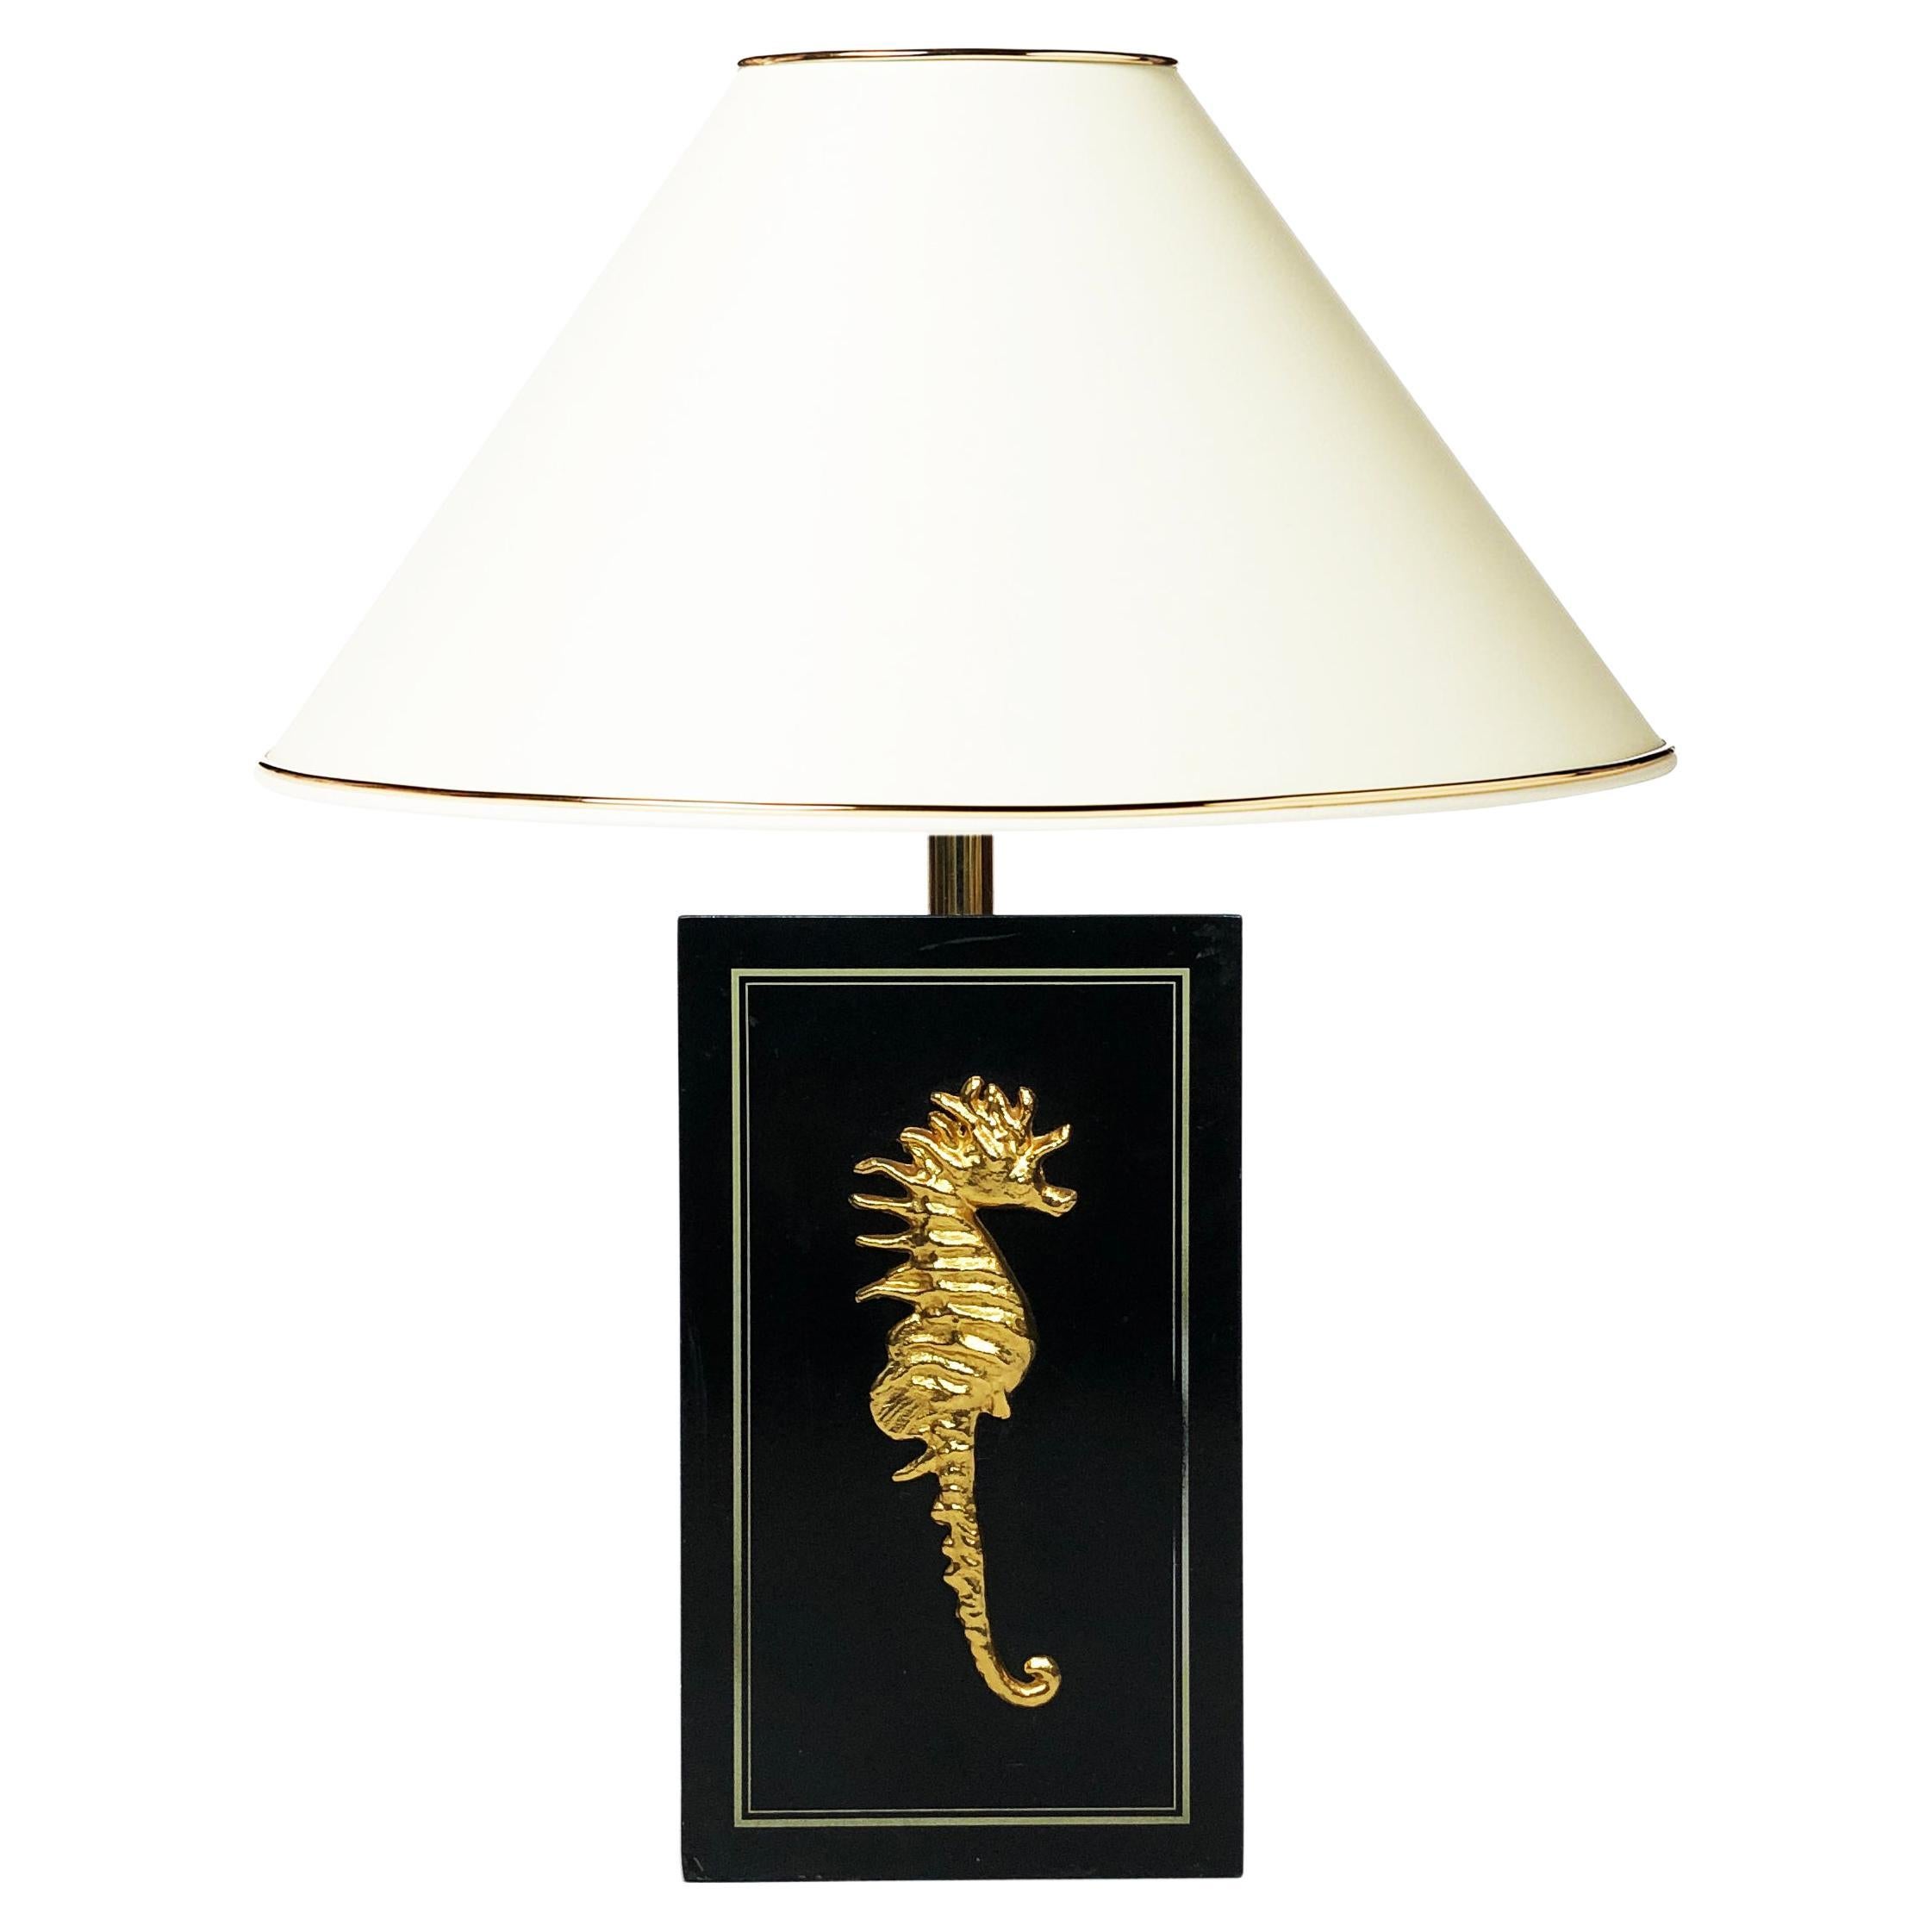 Brass Seahorse Table Lamp Midcentury Vintage Retro Hollywood Regency 1970s black